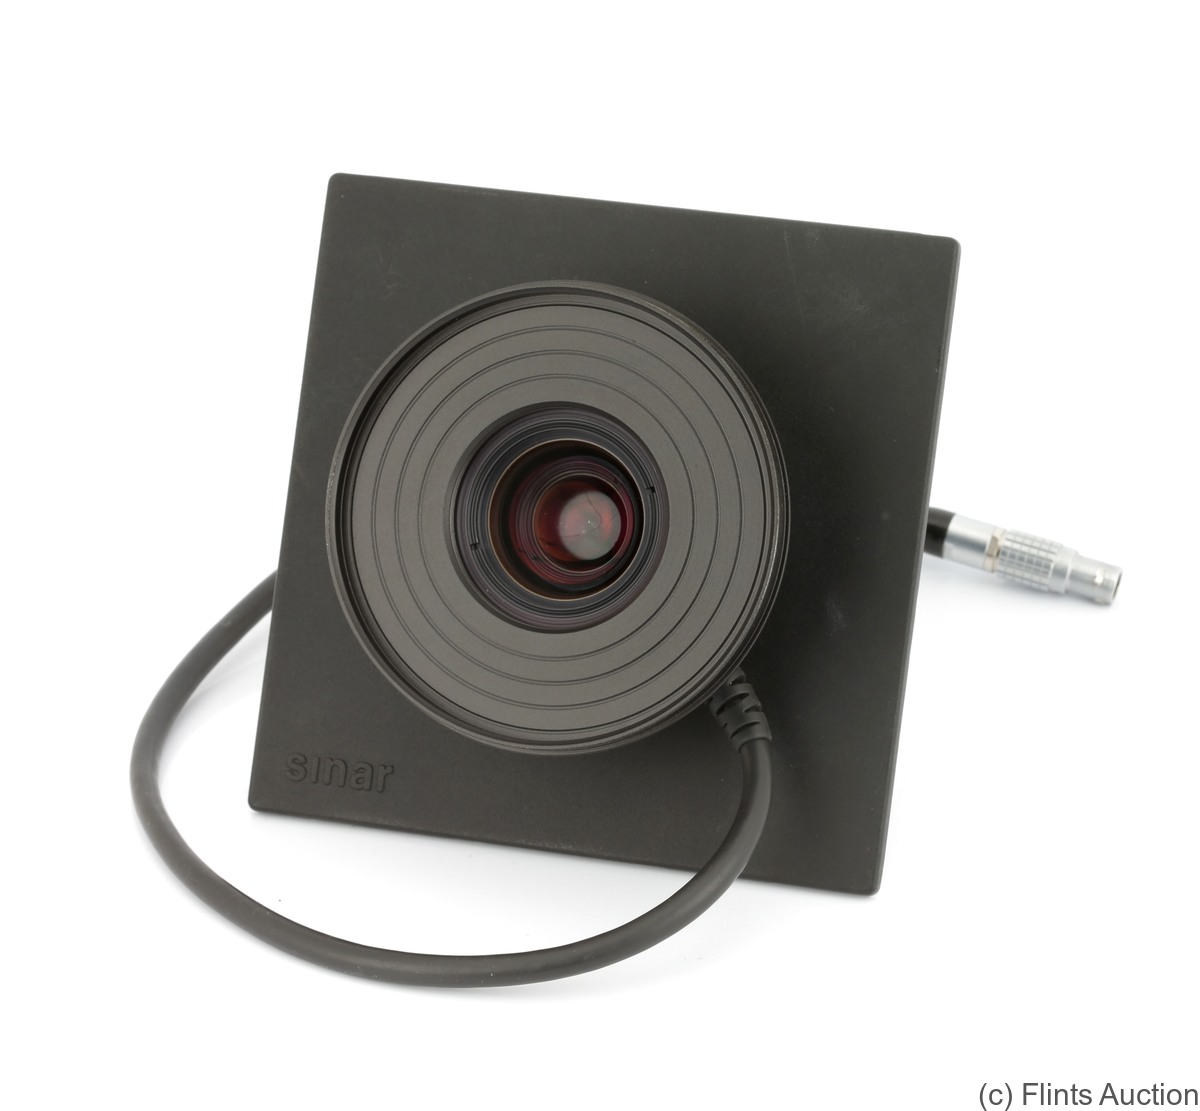 Sinar: 60mm (6cm) f4 Sinaron Digital HR camera